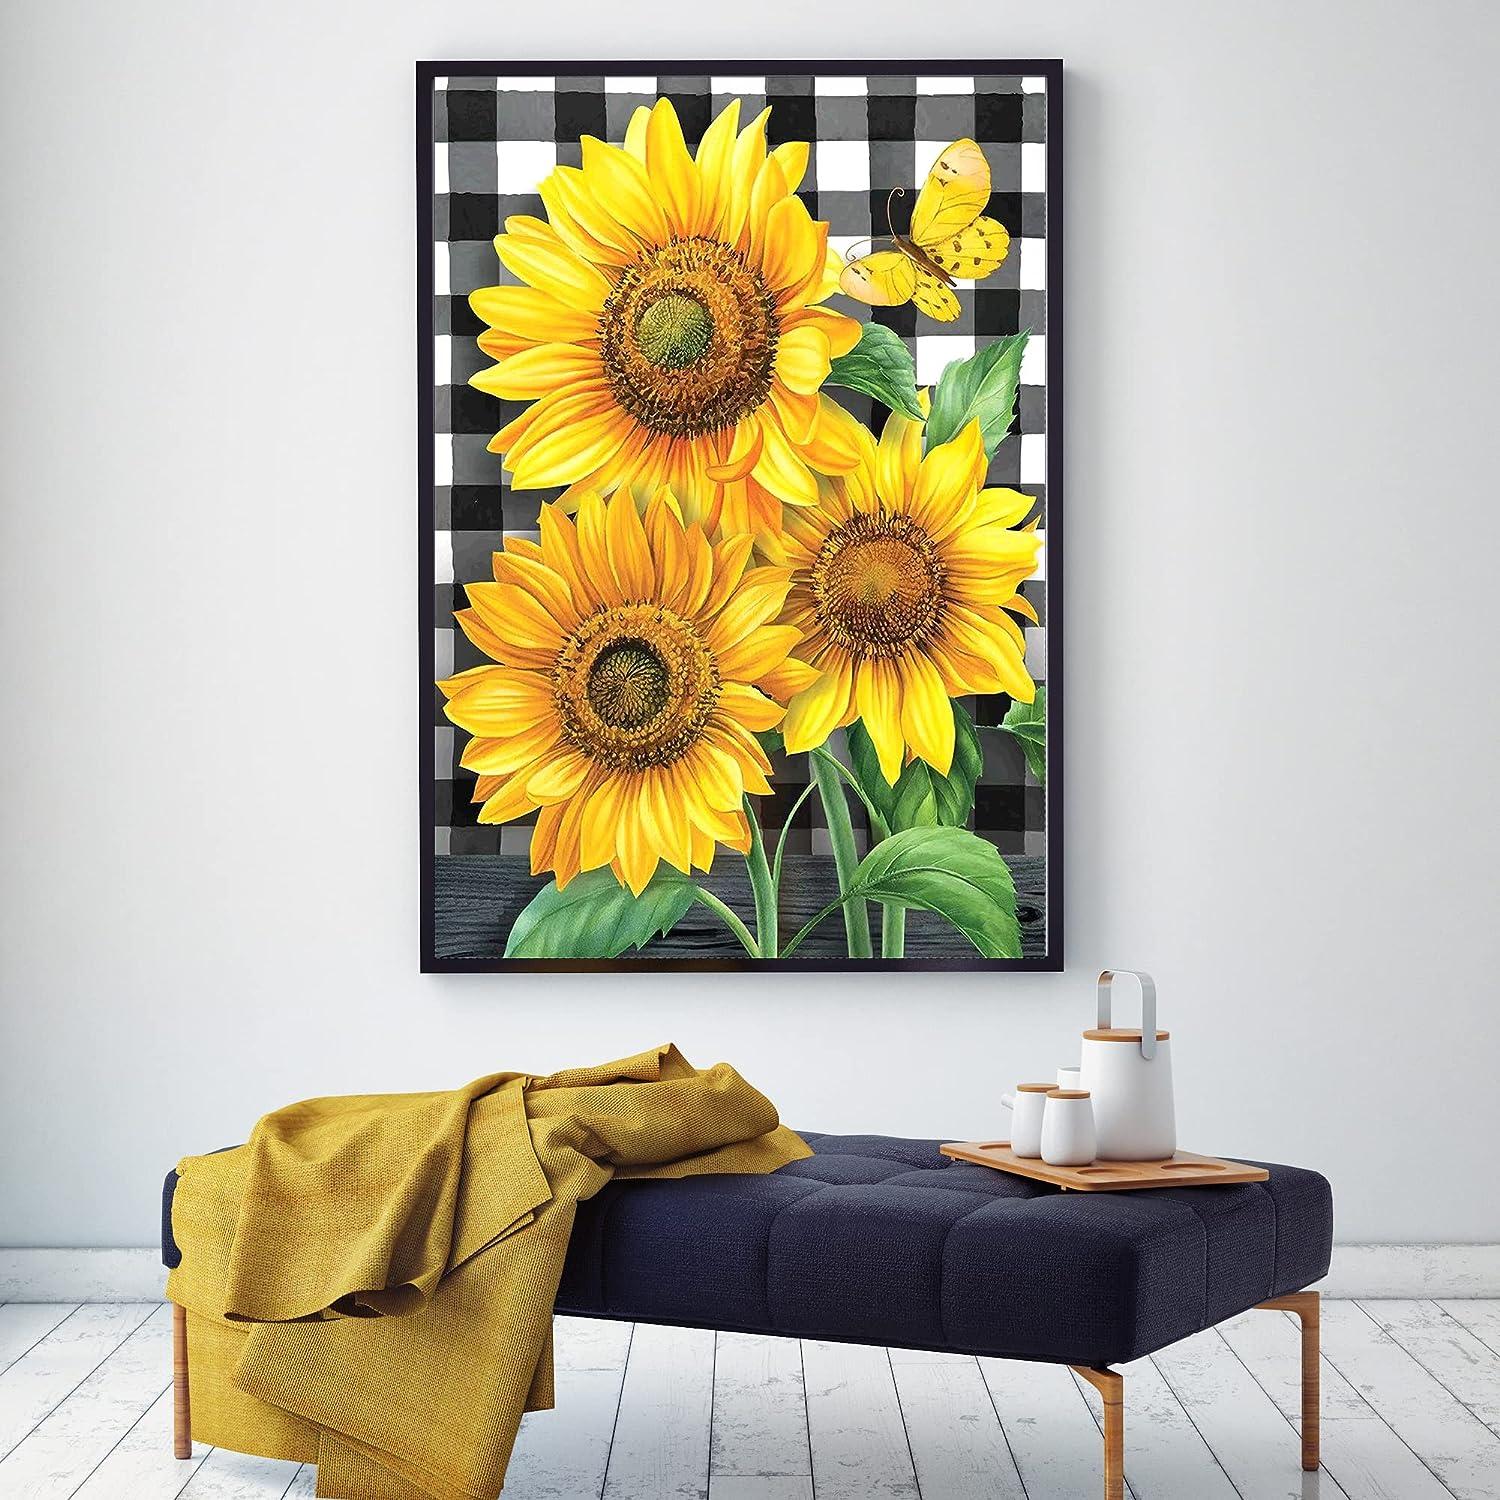 Aesthetic Sunflowers - 5D Diamond Painting 